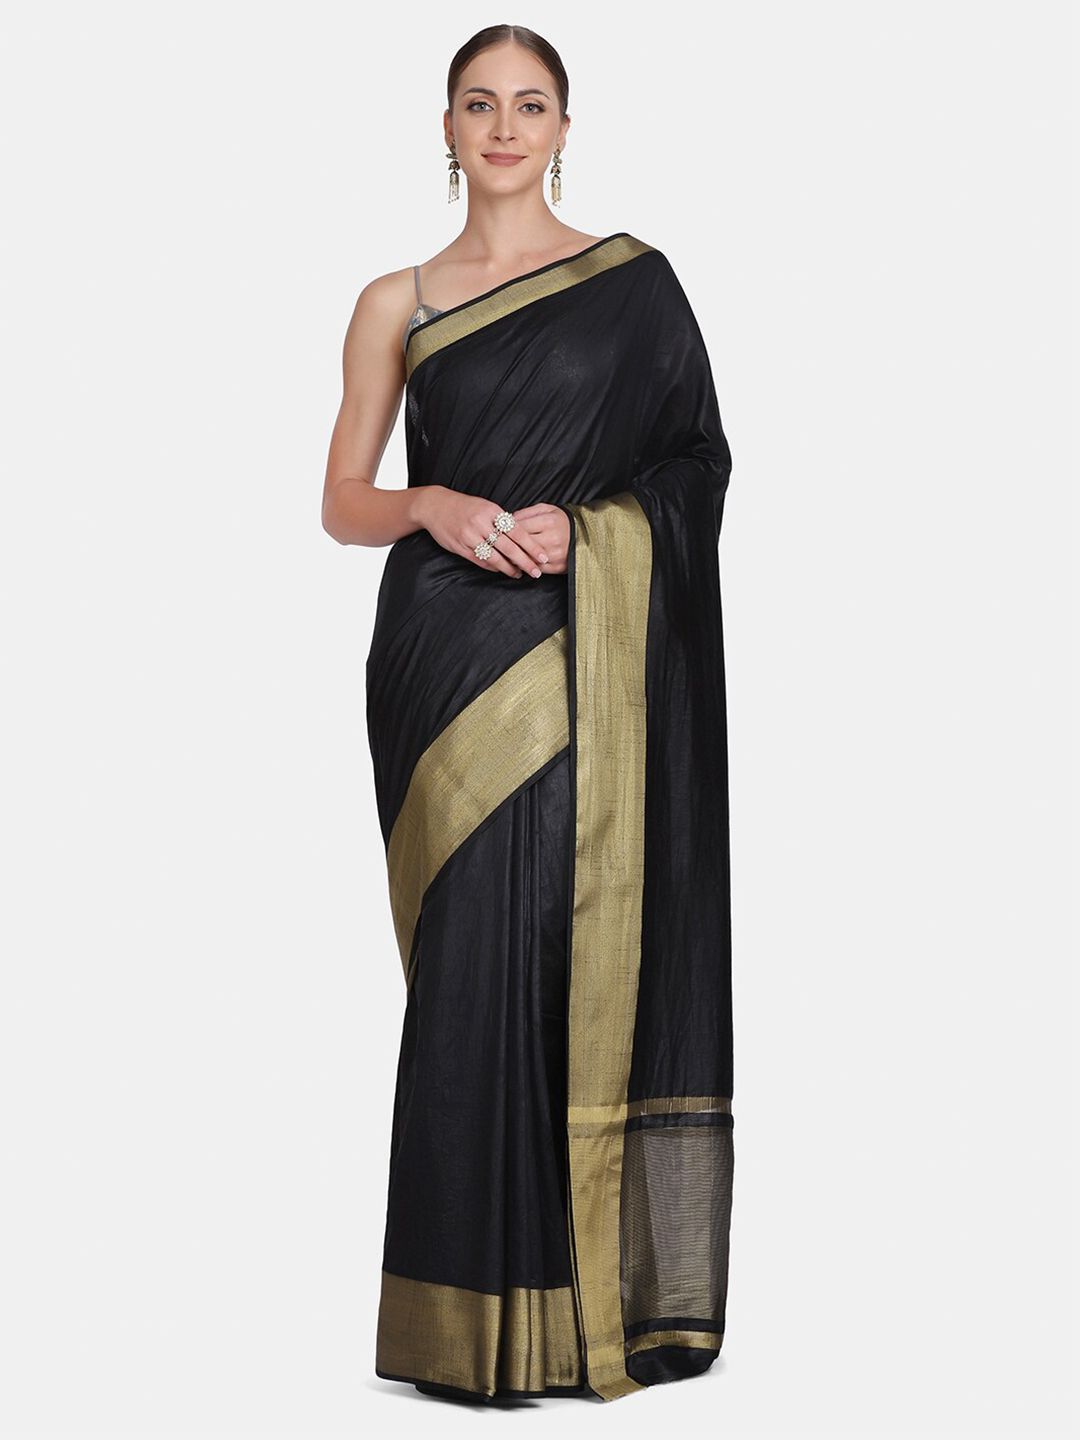 BOMBAY SELECTIONS Black & Golden Zari Art Silk Banarasi Saree Price in India